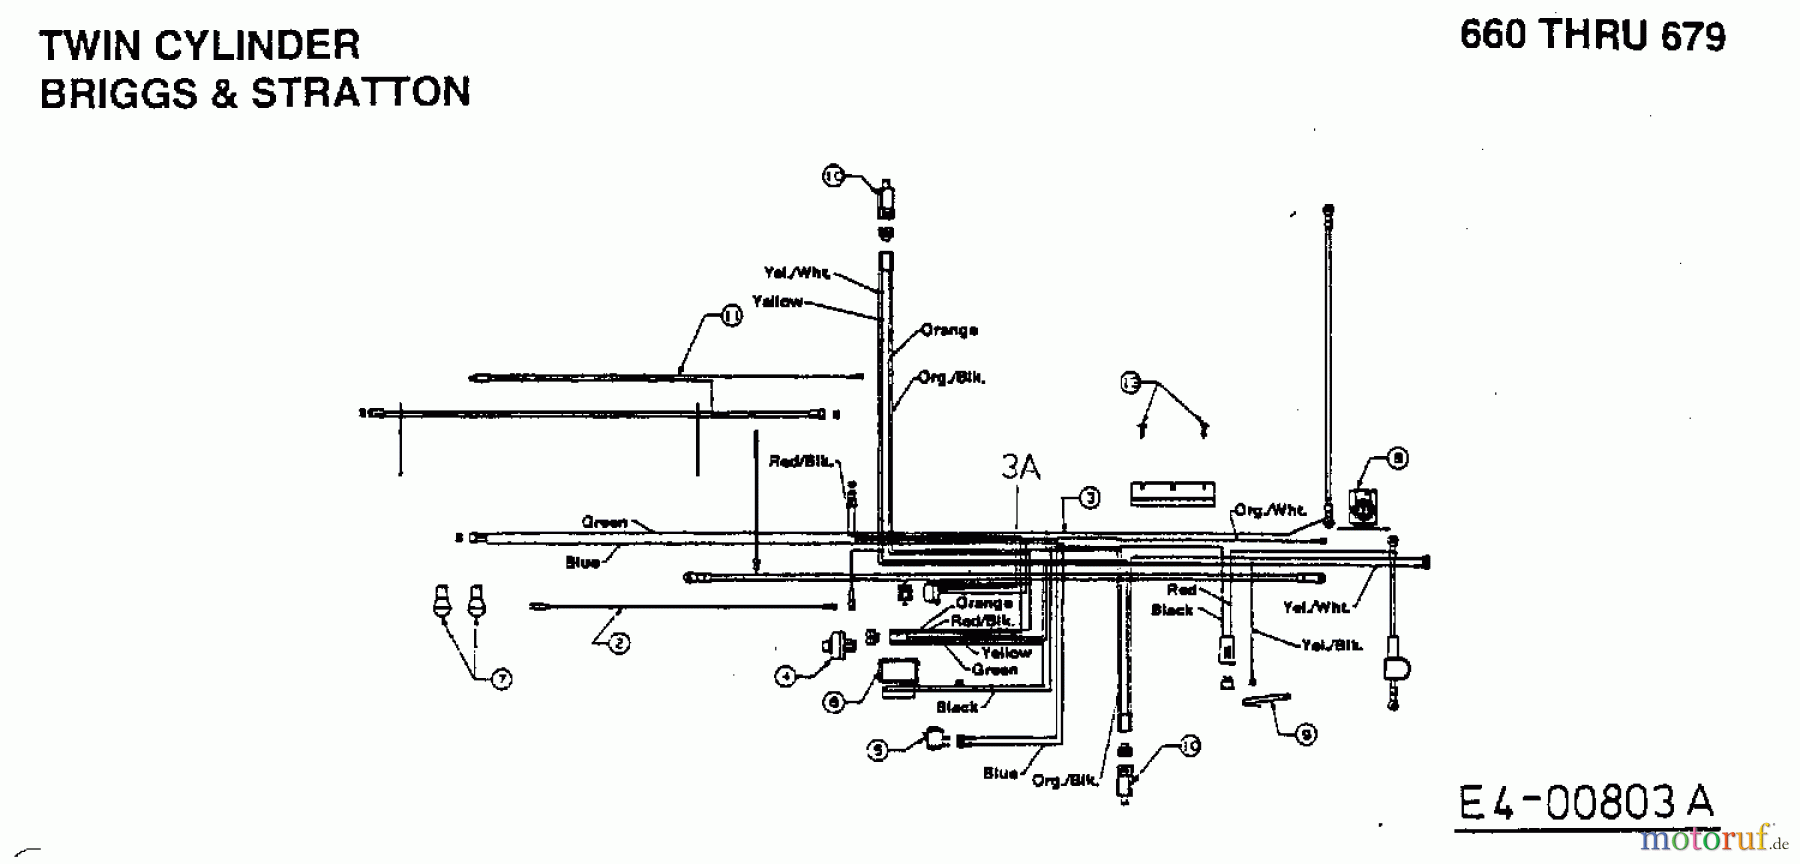  MTD Lawn tractors H 130 13AA695F678  (1998) Wiring diagram twin cylinder